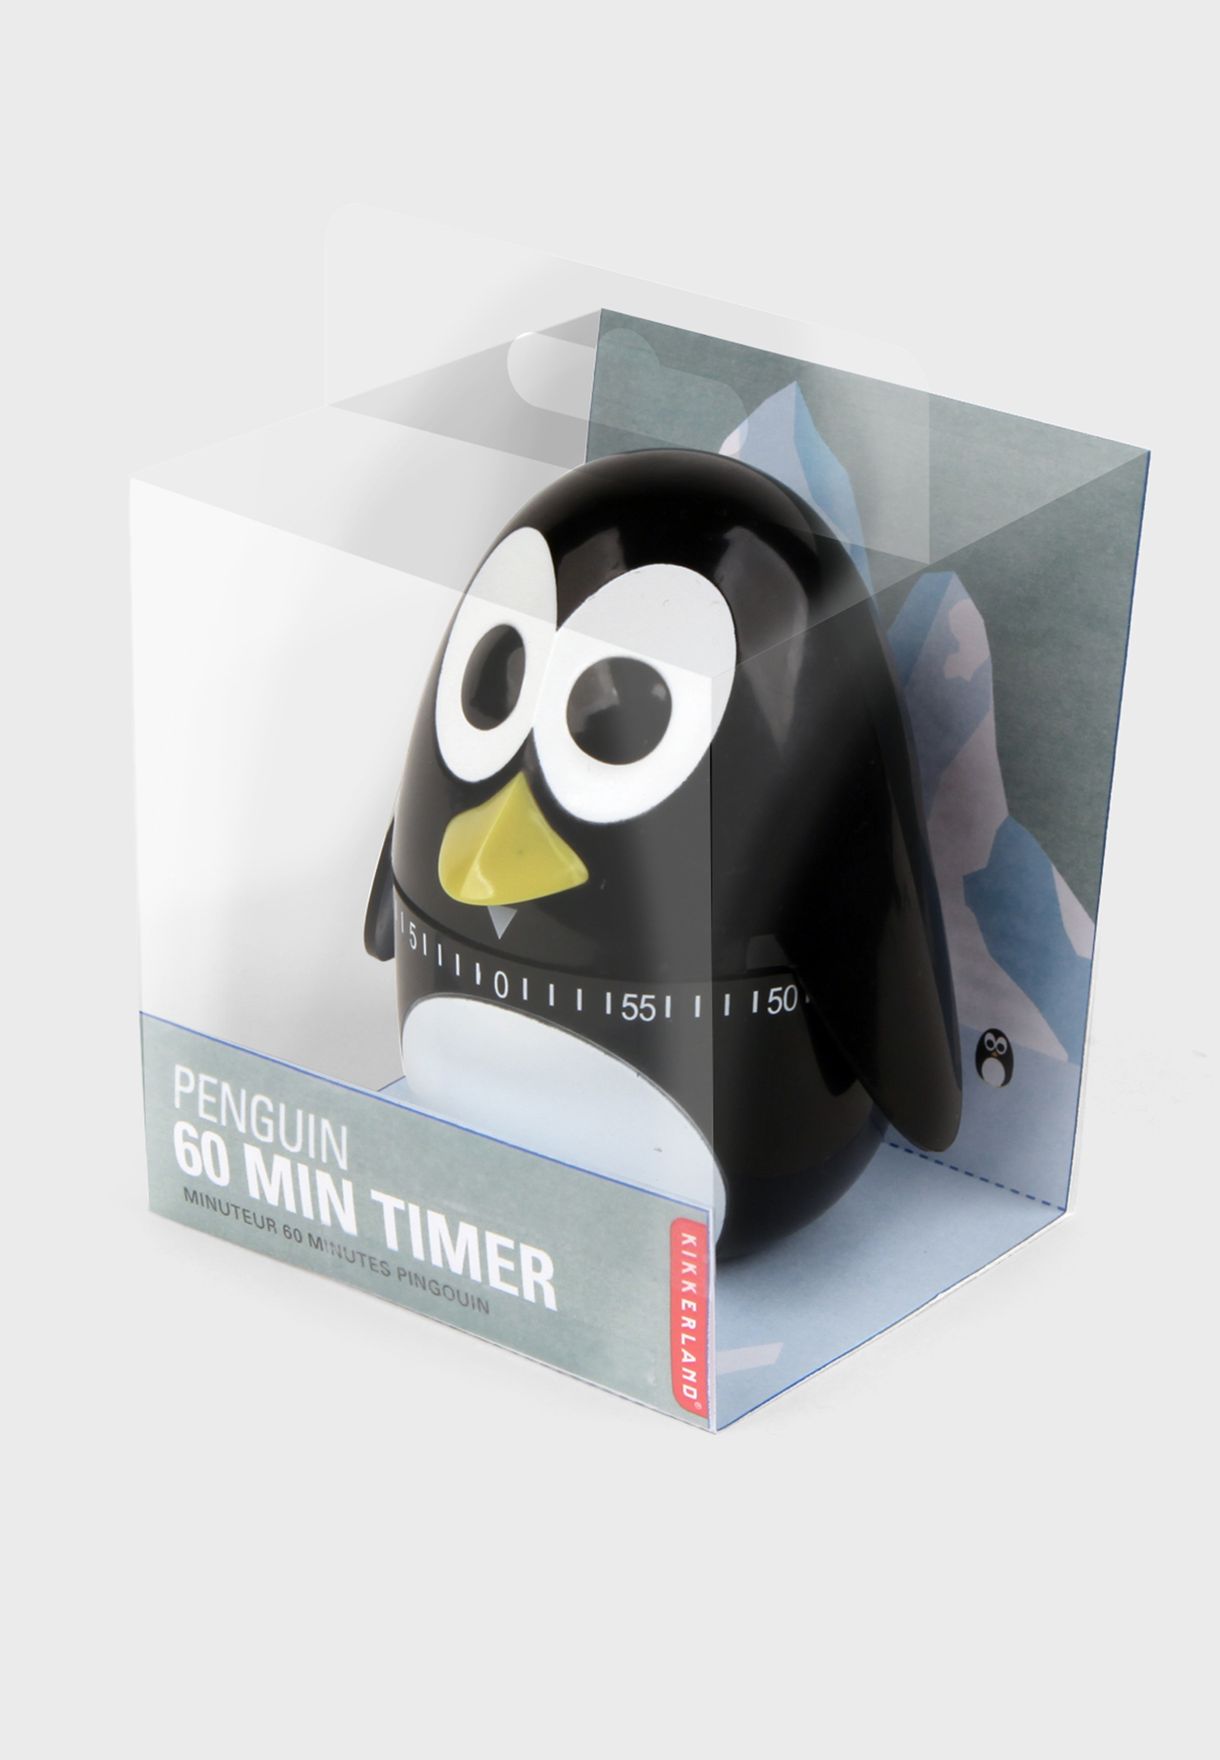 Penguin Kitchen Timer